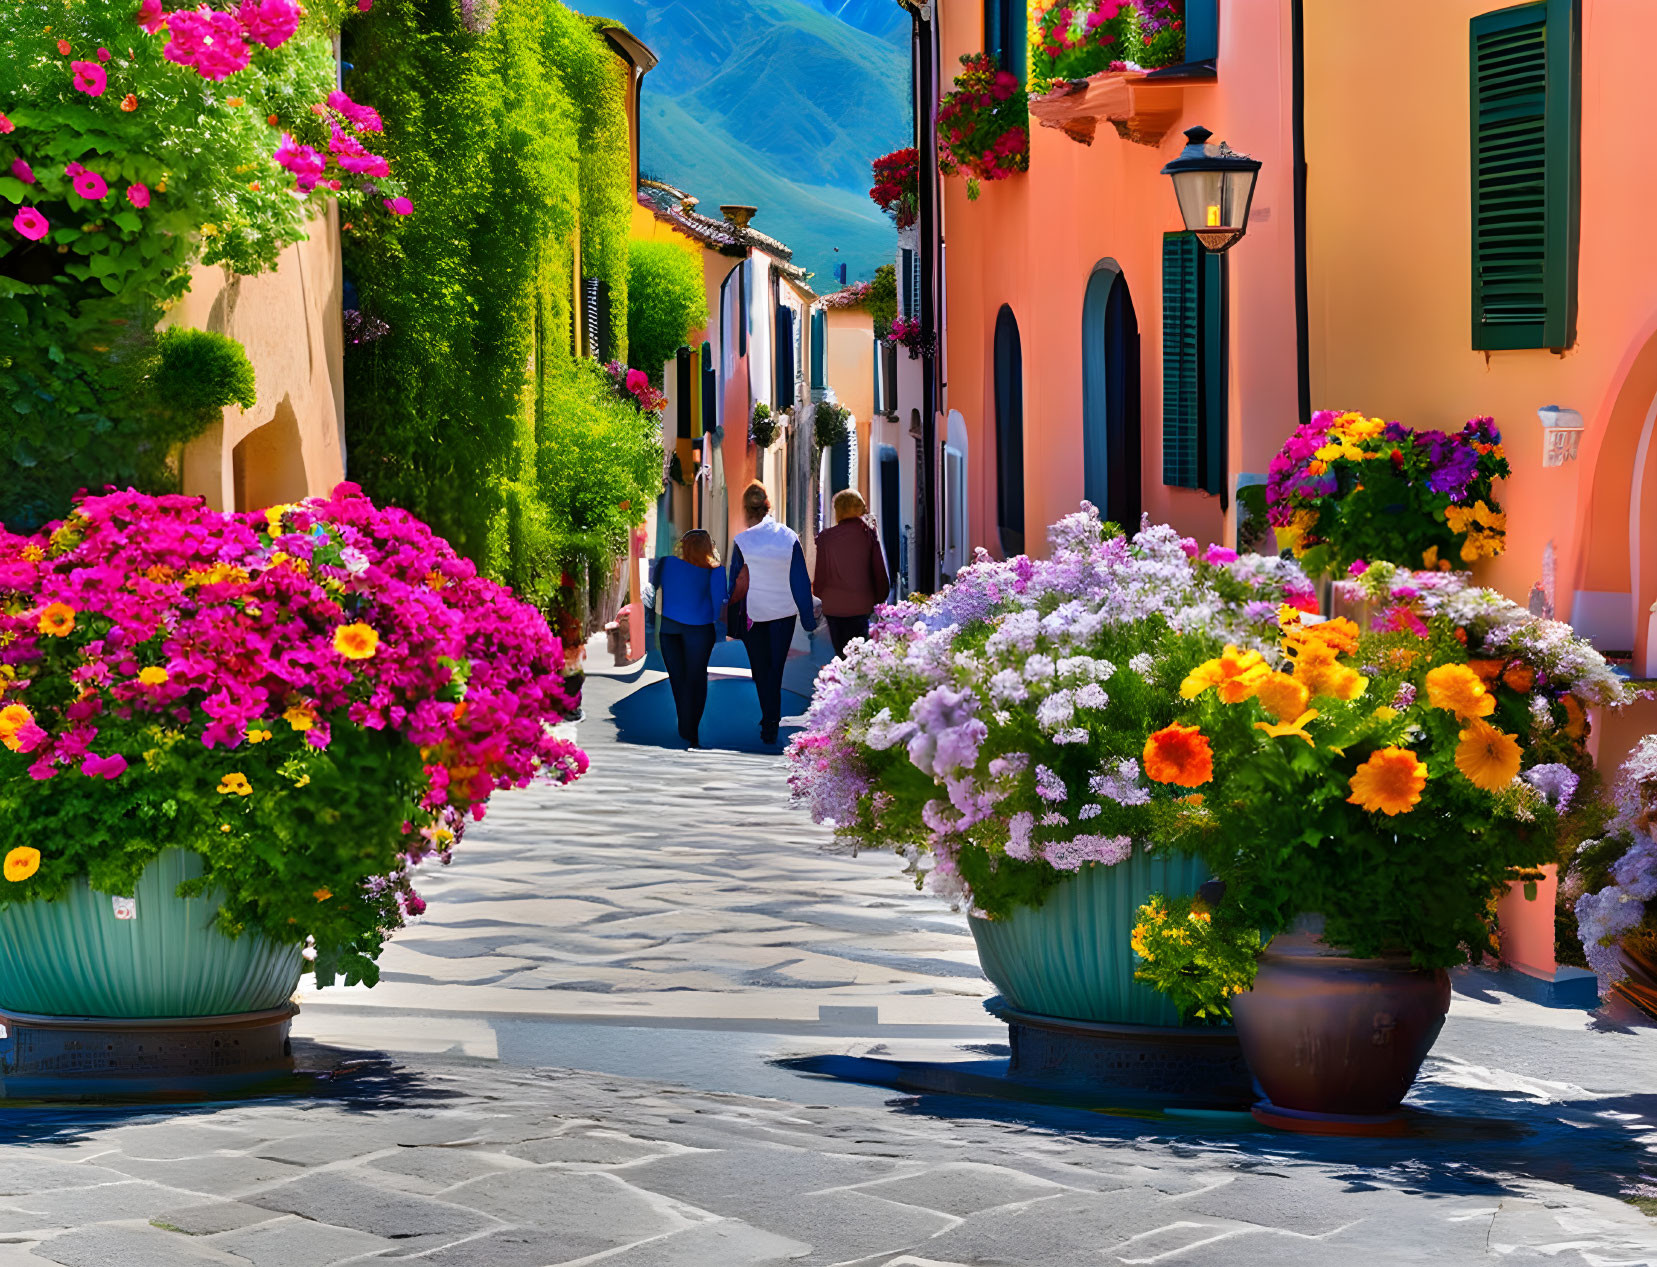 Picturesque Italian City full of flowers